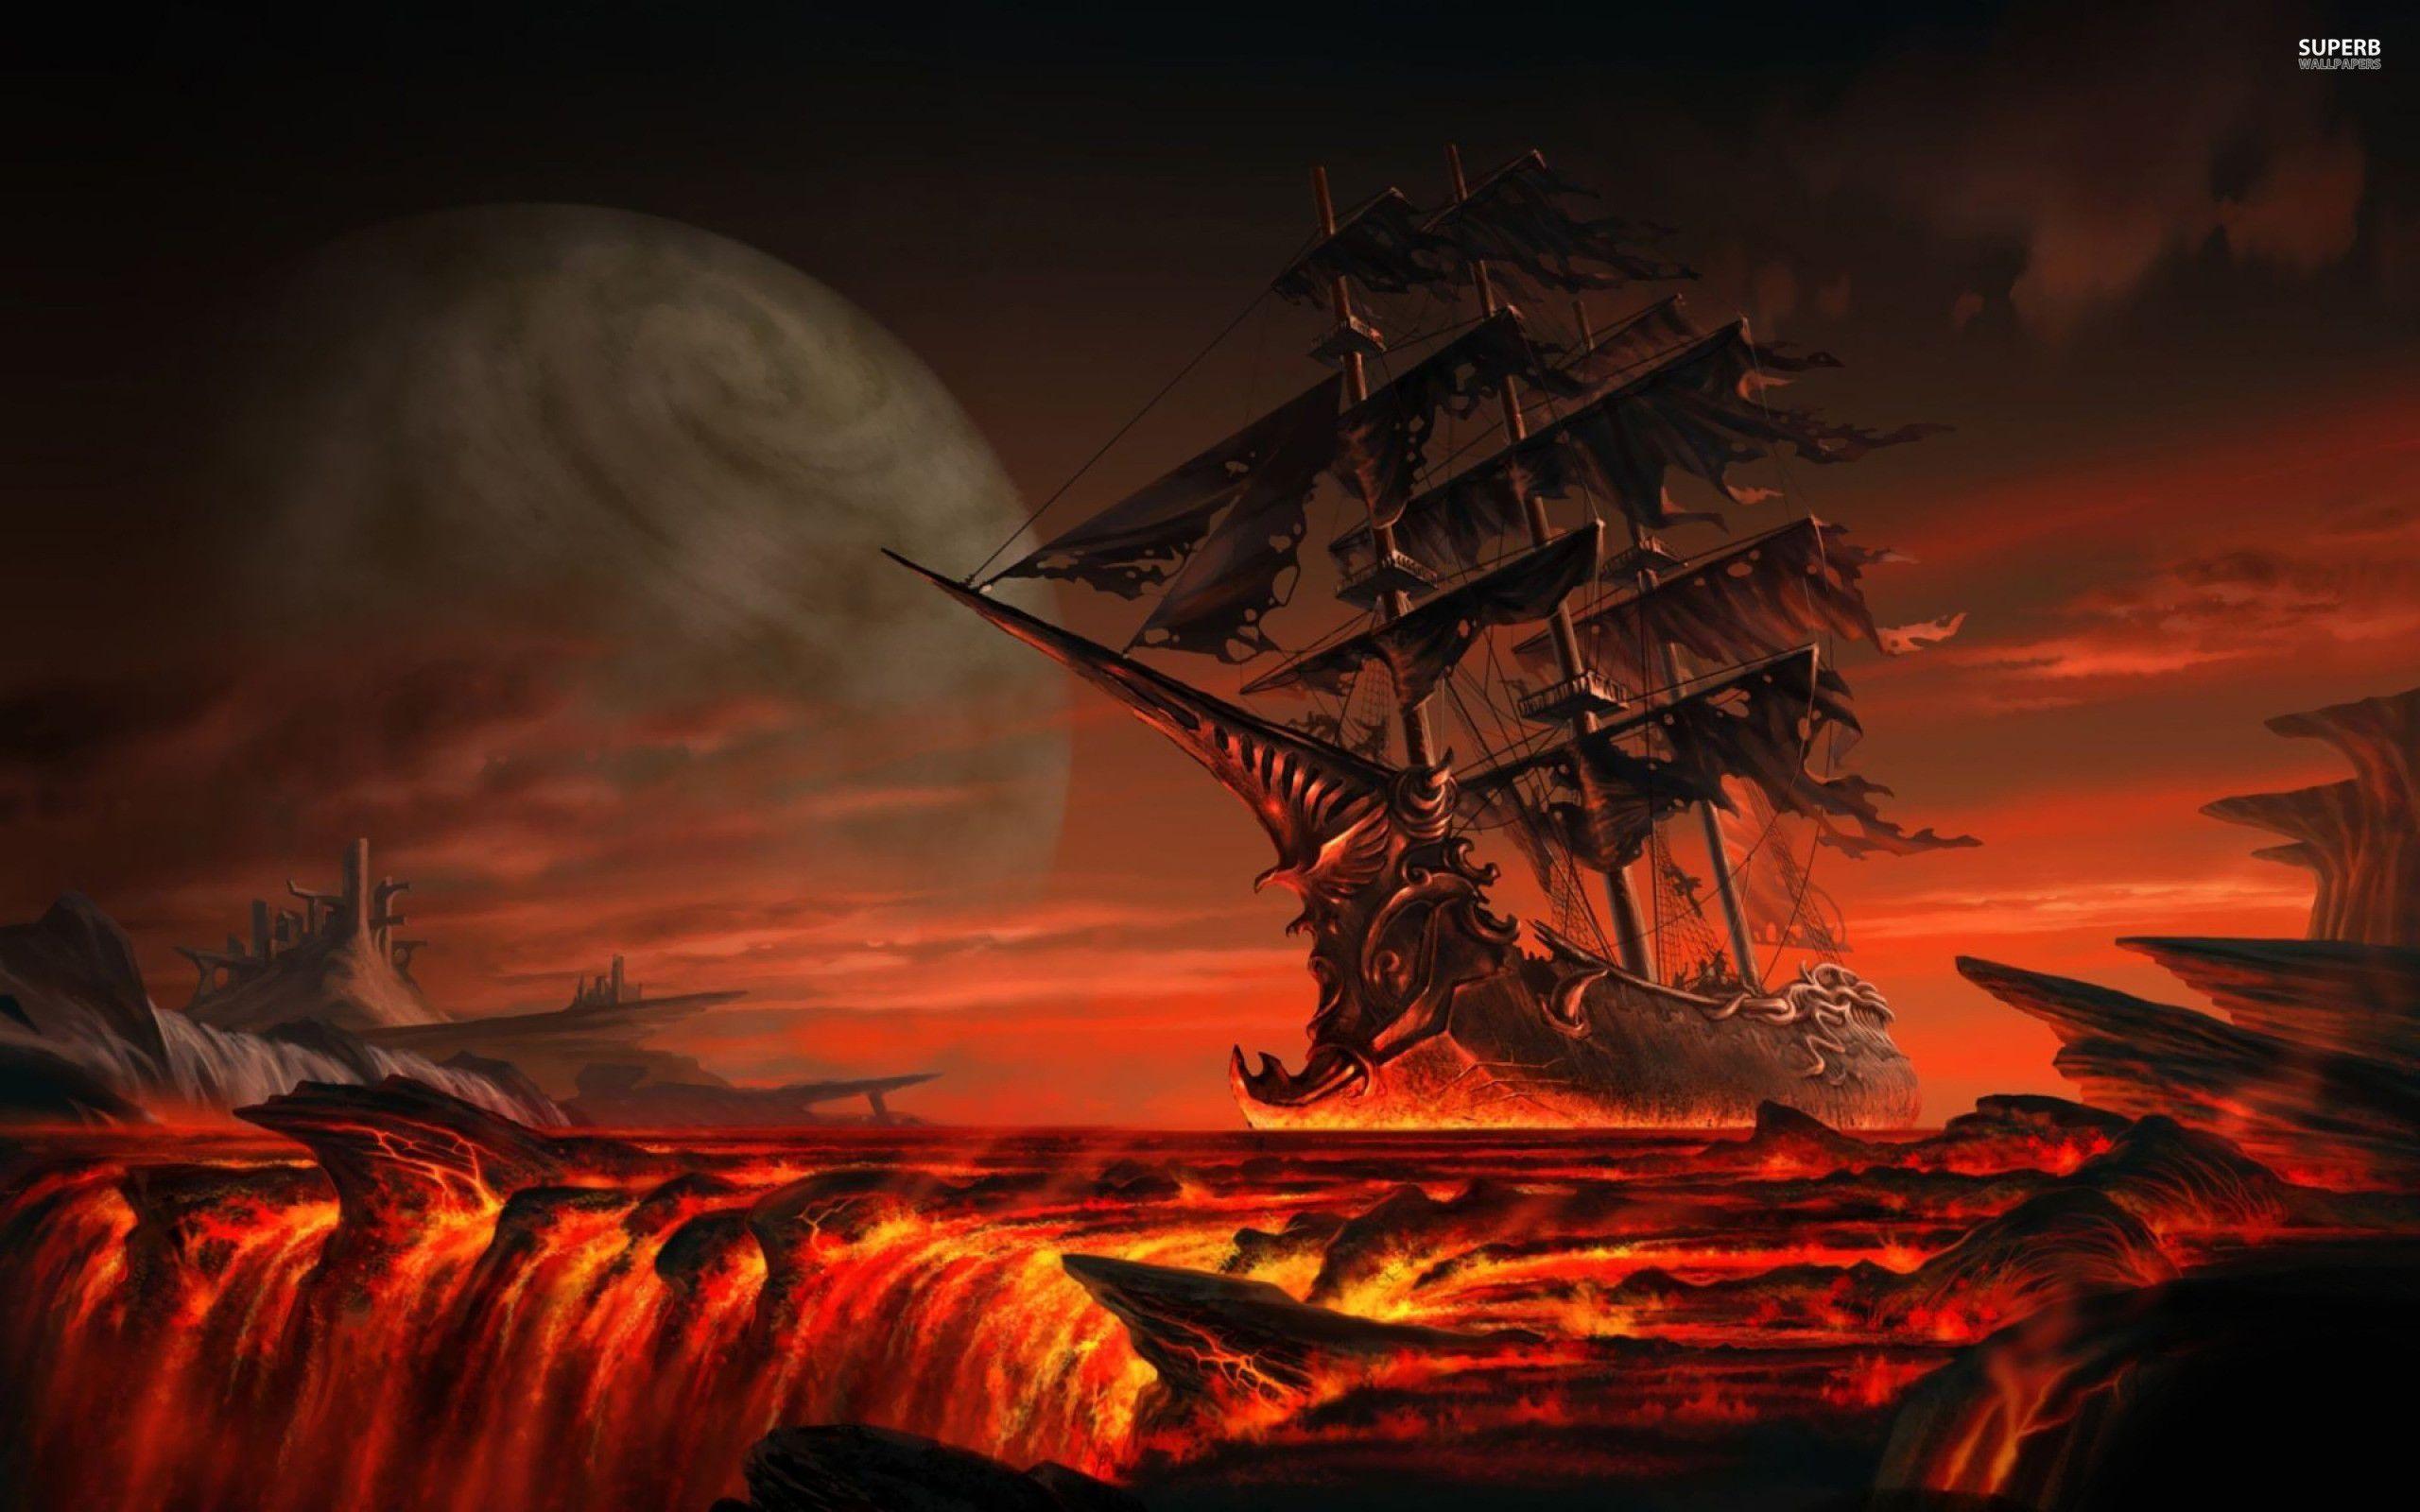 Pirate Ship Wallpaper